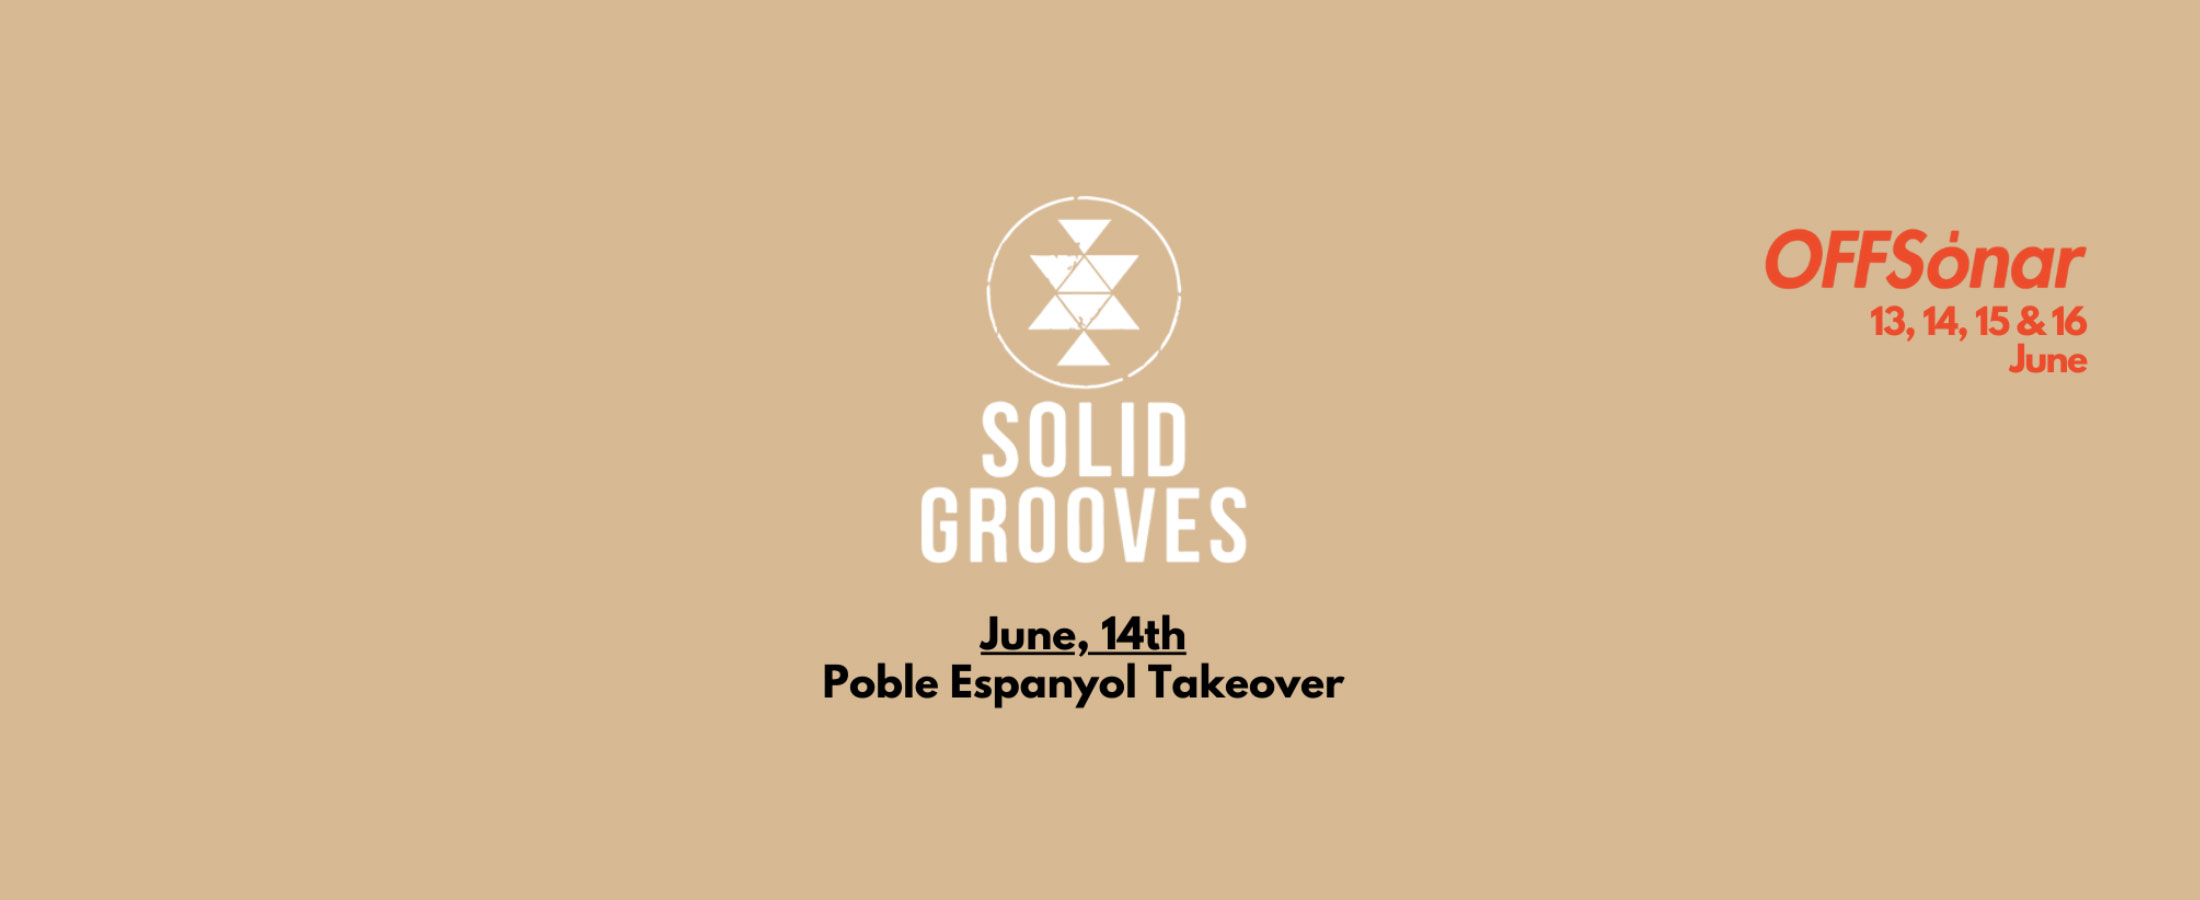 Solid Grooves Barcelona